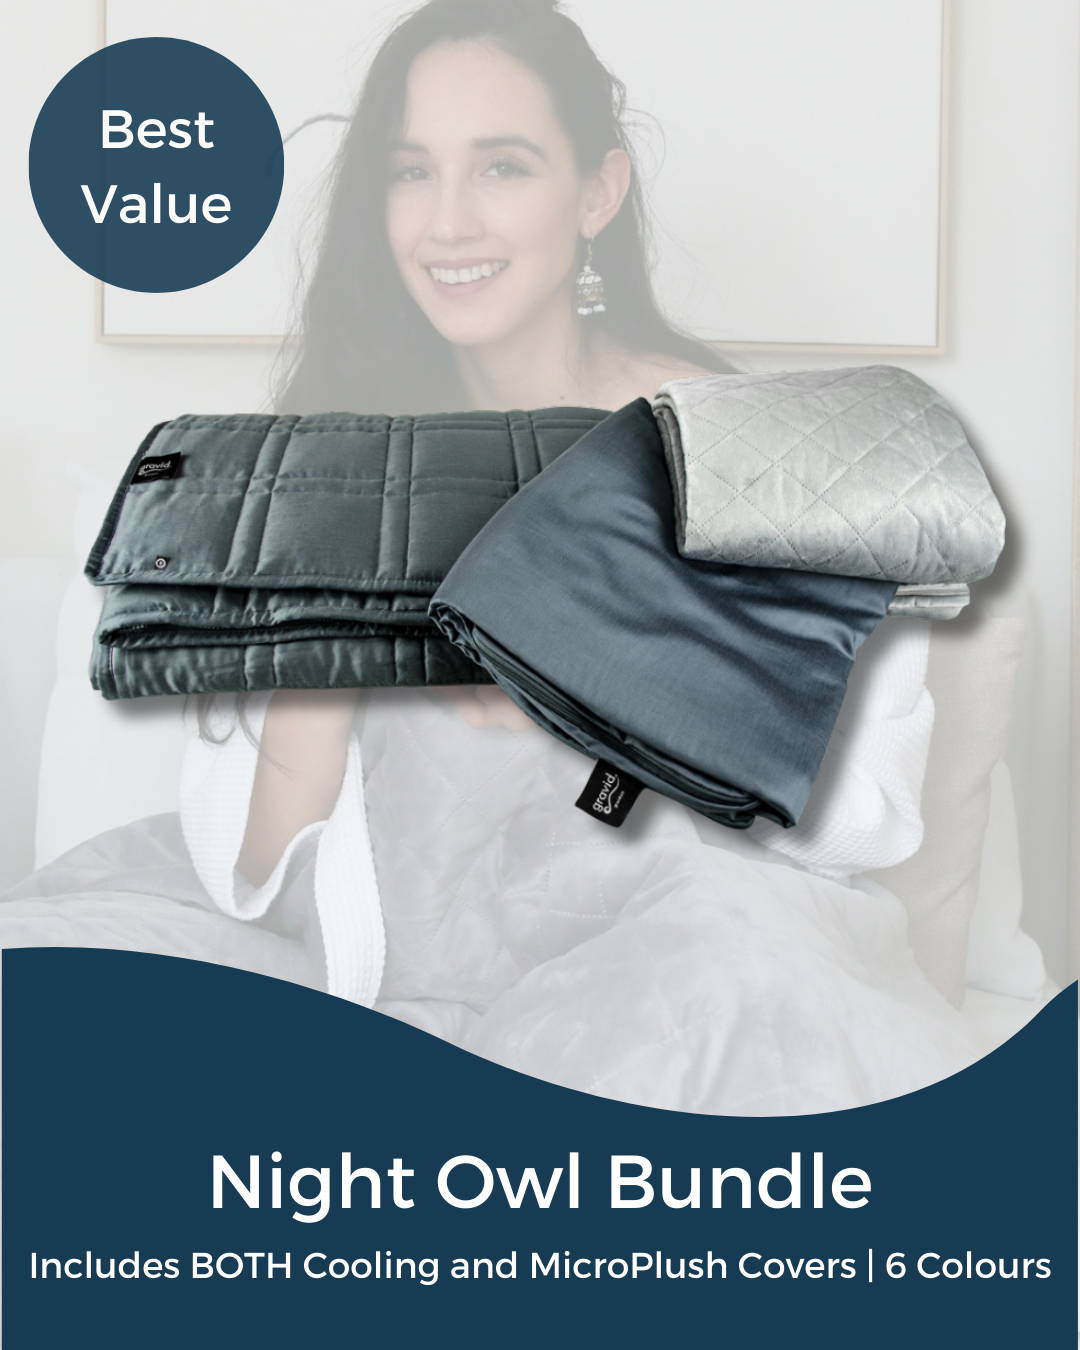 Weighted Blanket - Night Owl Bundle